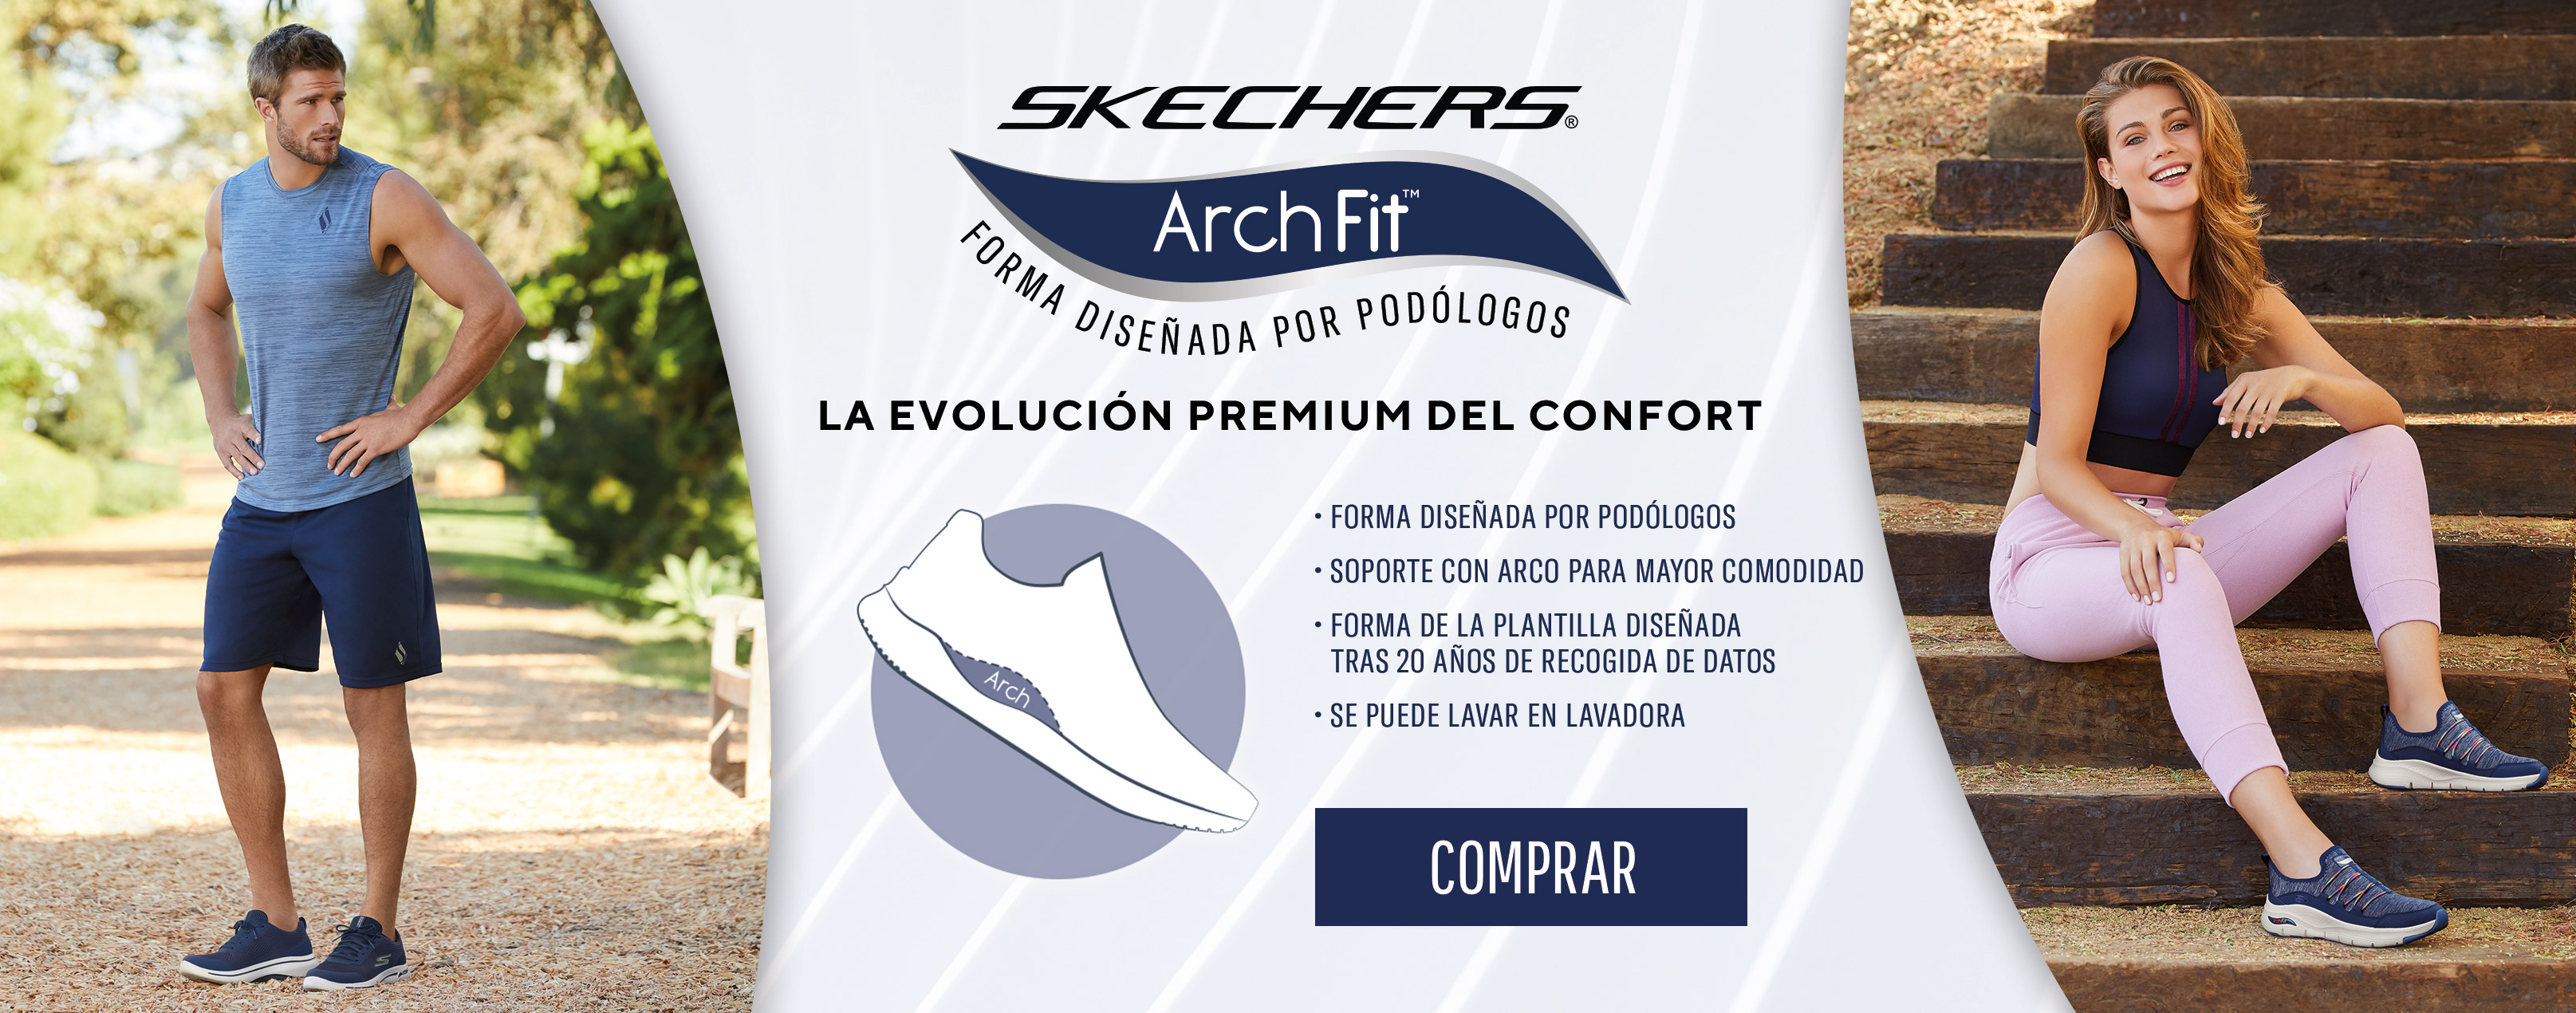 Pagina Oficial De Skechers, Buy Now, Cheap Sale, 55% OFF, www.busformentera.com